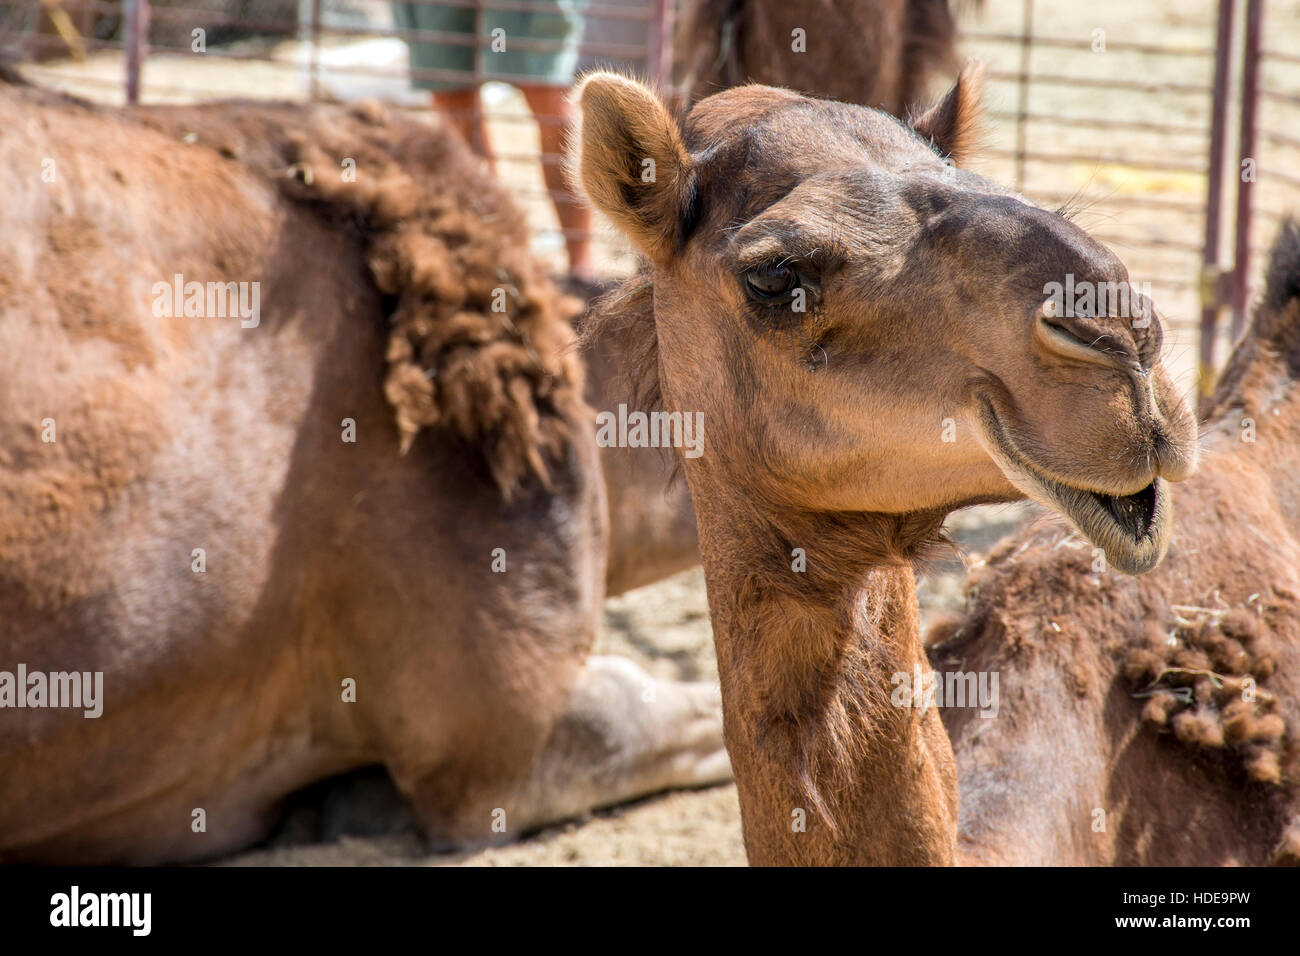 wildlife Camel funny sweet looking smiling inside Camera Oman salalah Arabic 4 Stock Photo